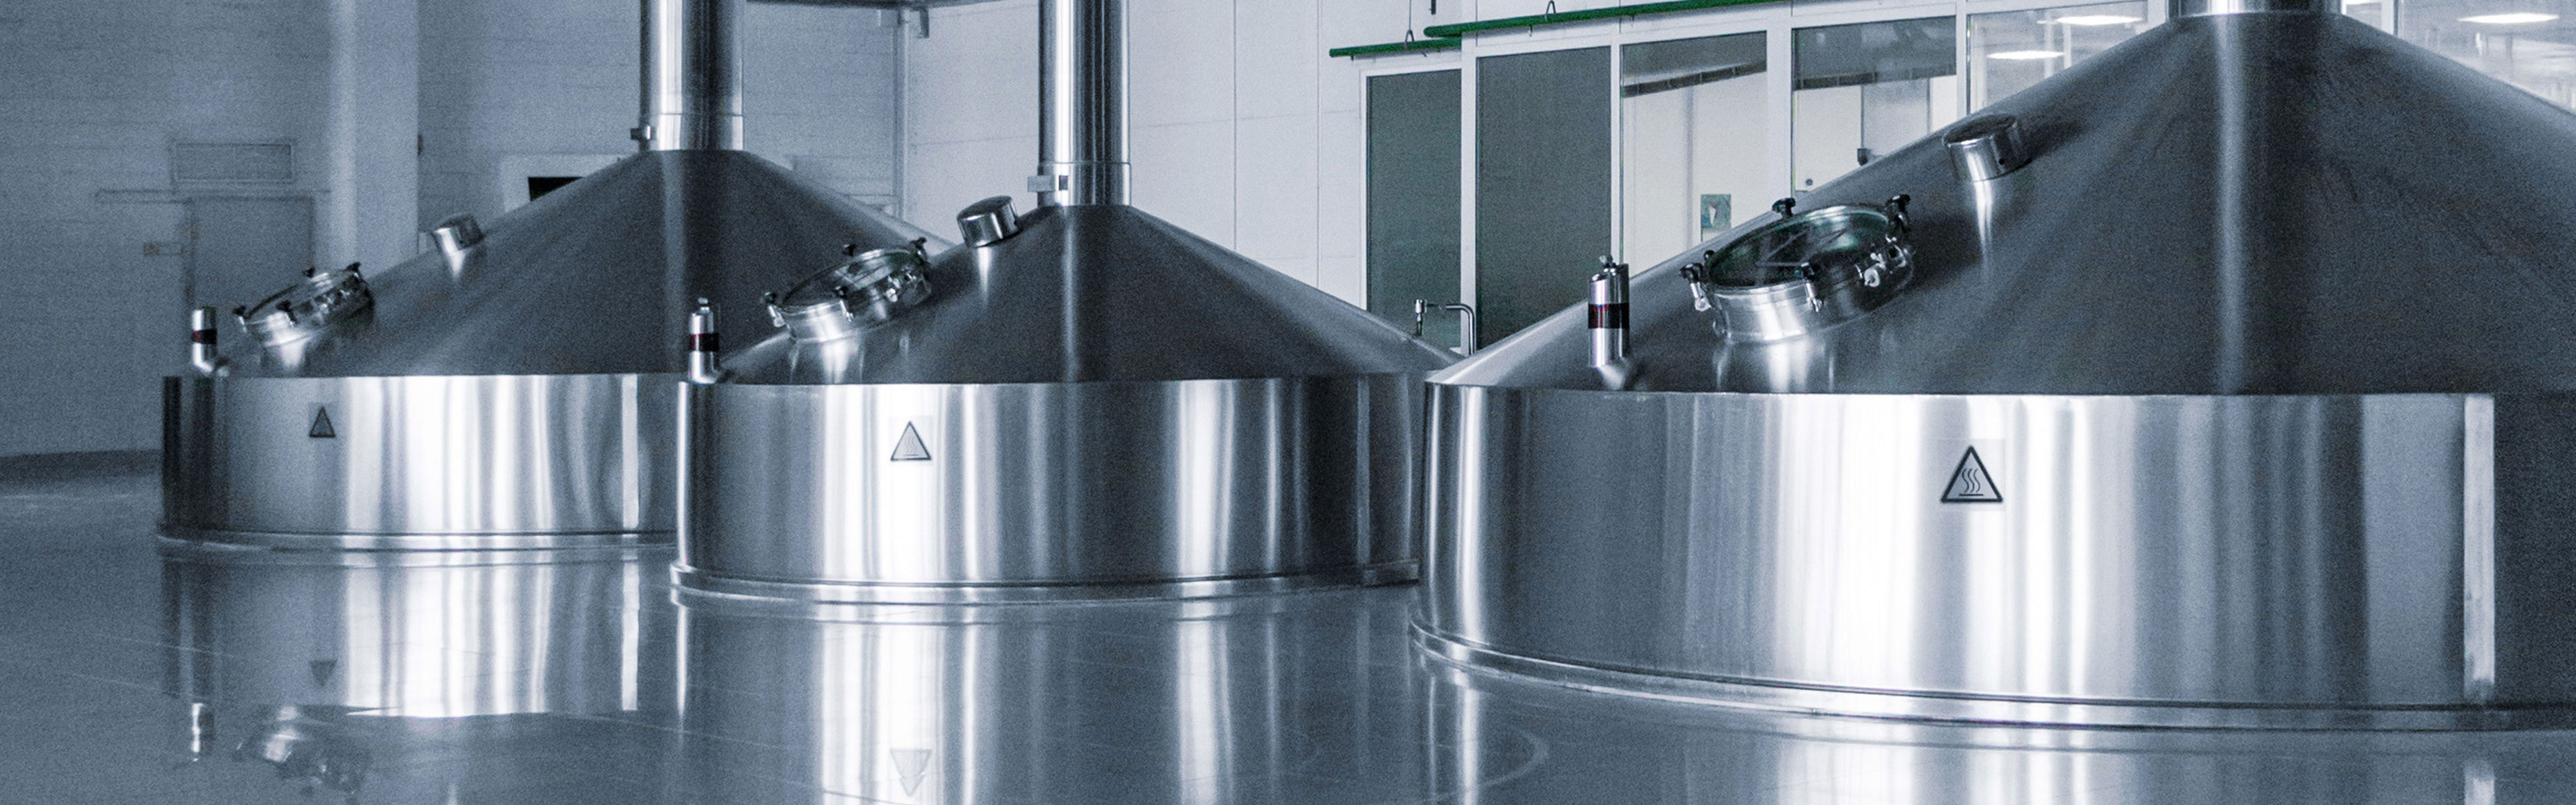 breweries-and-distilleries